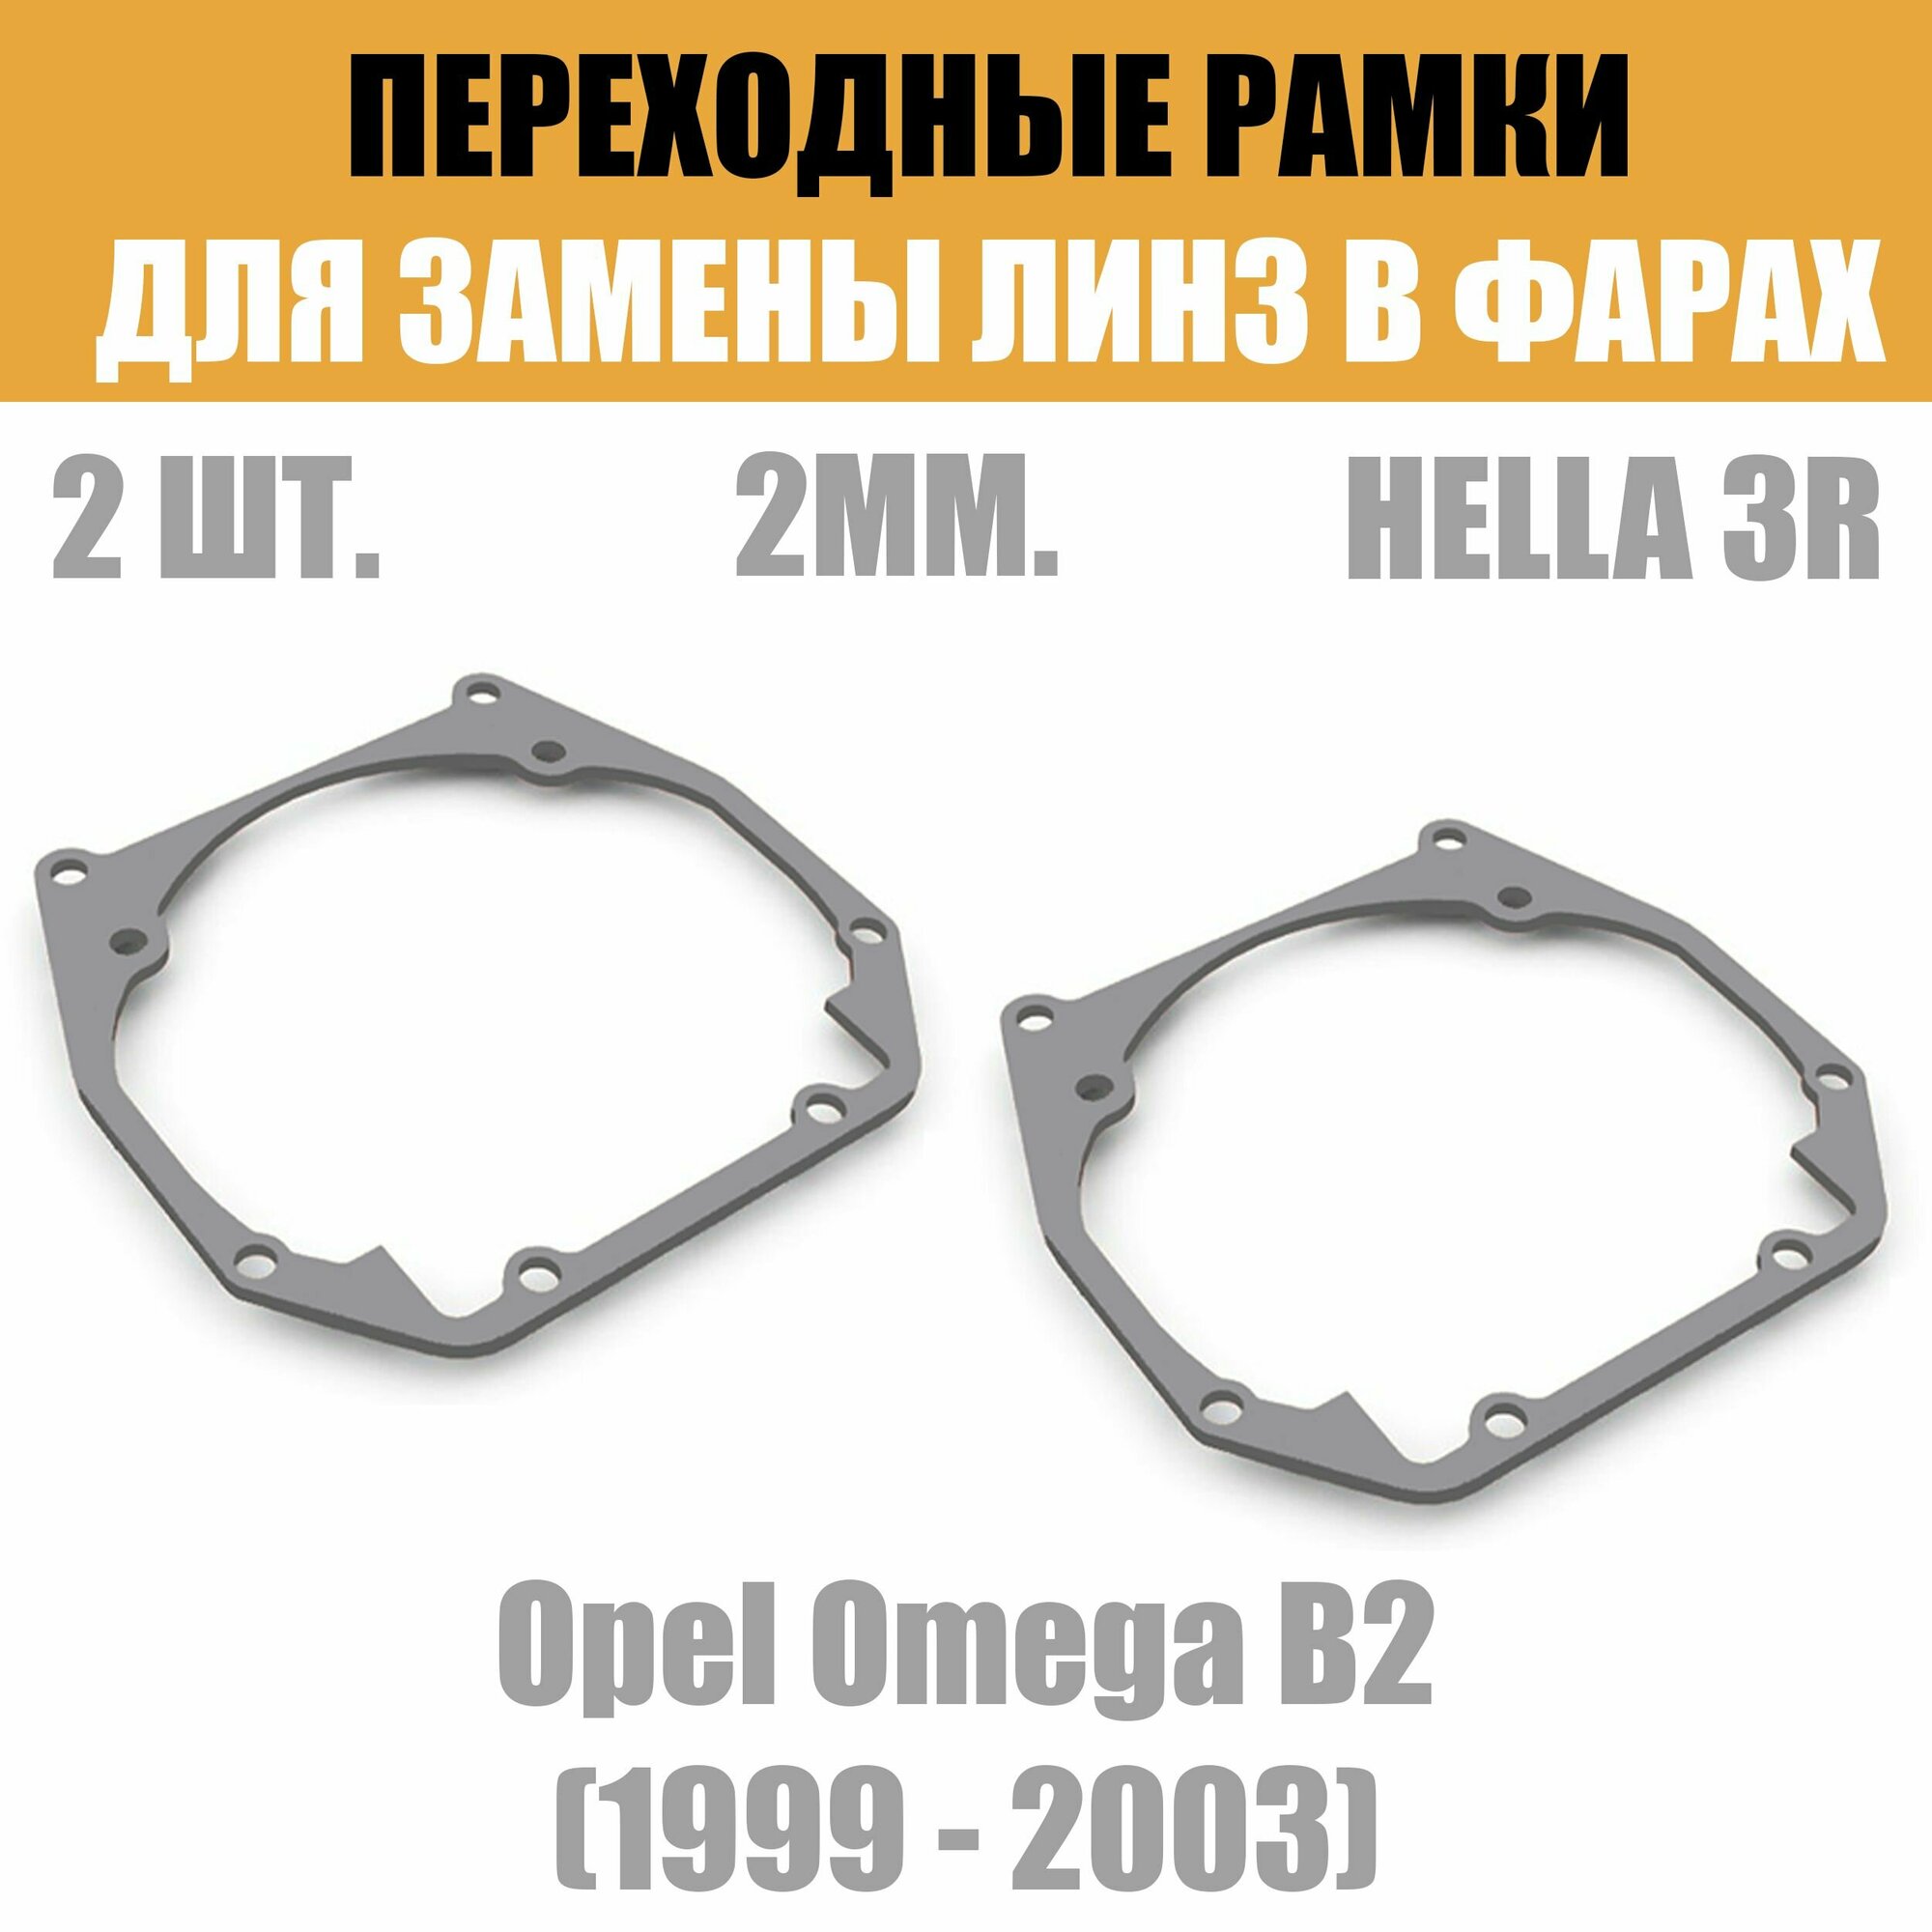 Переходные рамки для линз №61 на Opel Omega B2 (1999 - 2003) под модуль Hella 3R/Hella 3 (Комплект 2шт)